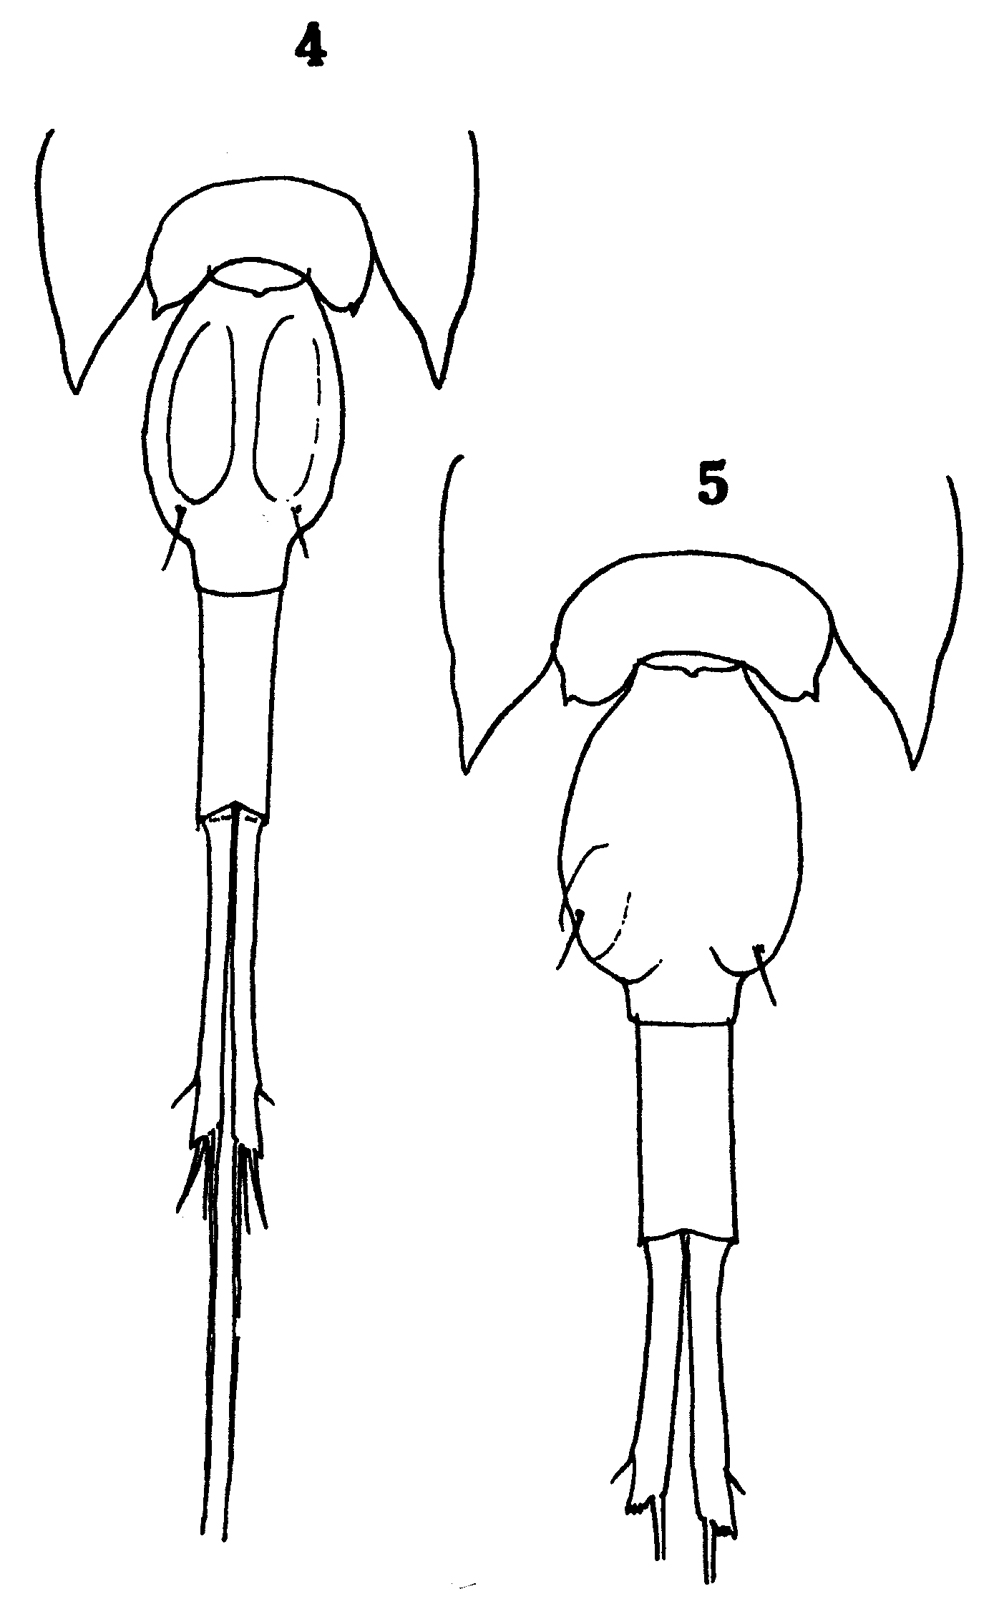 Espce Corycaeus (Onychocorycaeus) agilis - Planche 18 de figures morphologiques